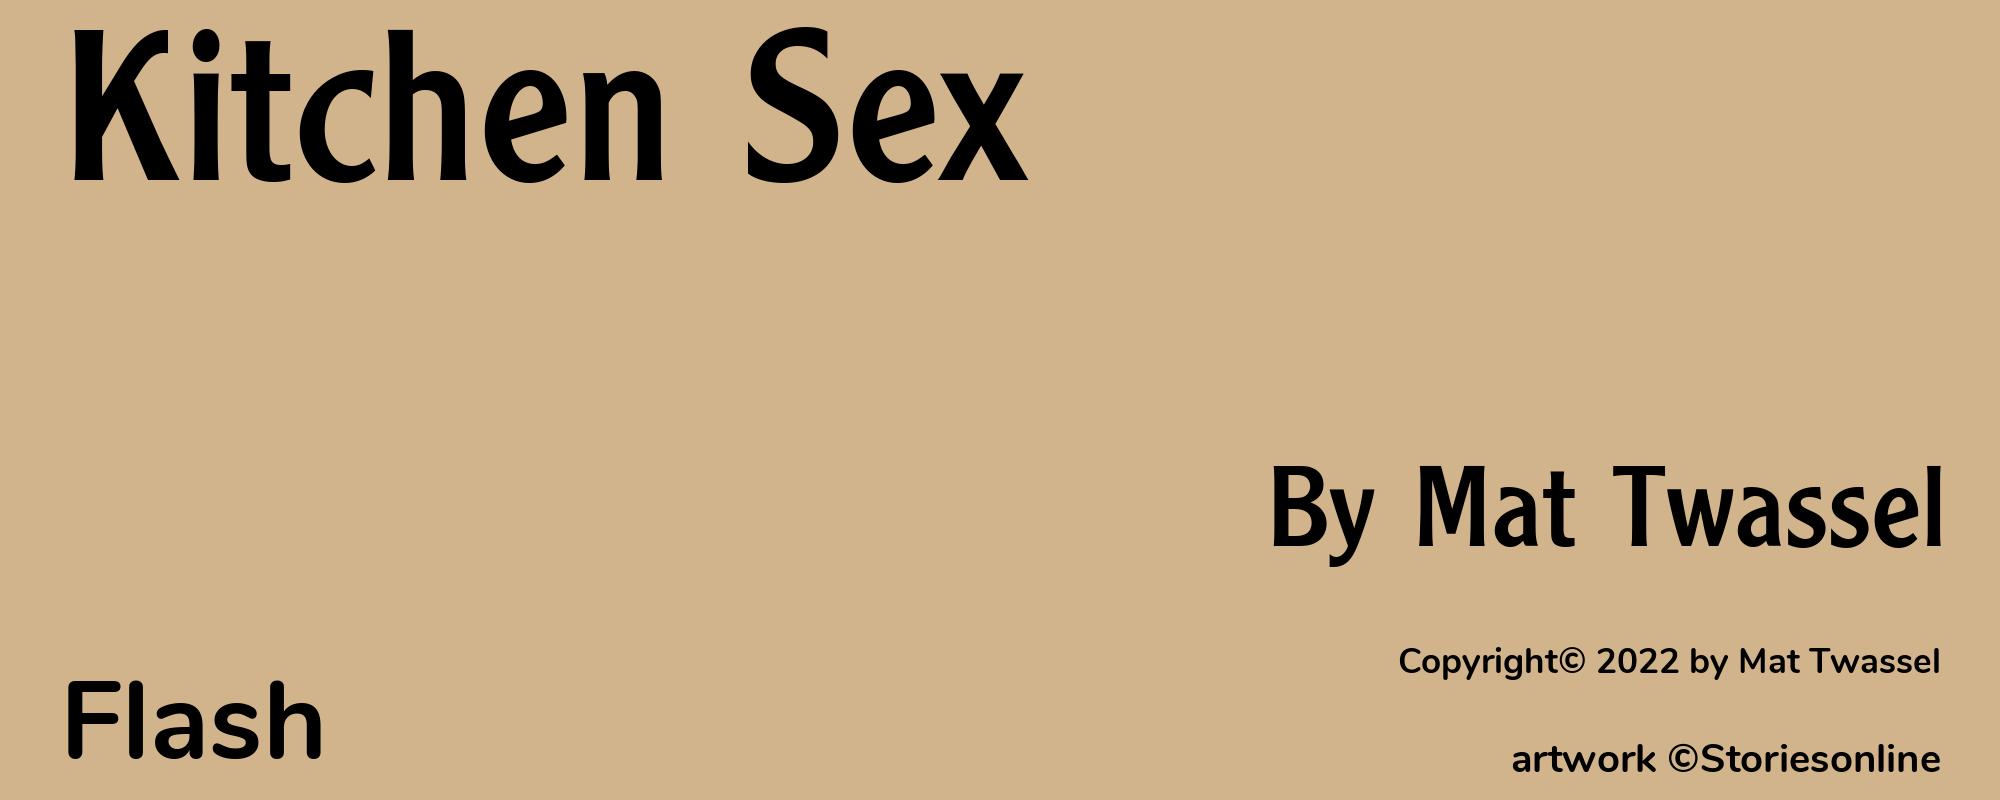 Kitchen Sex - Cover